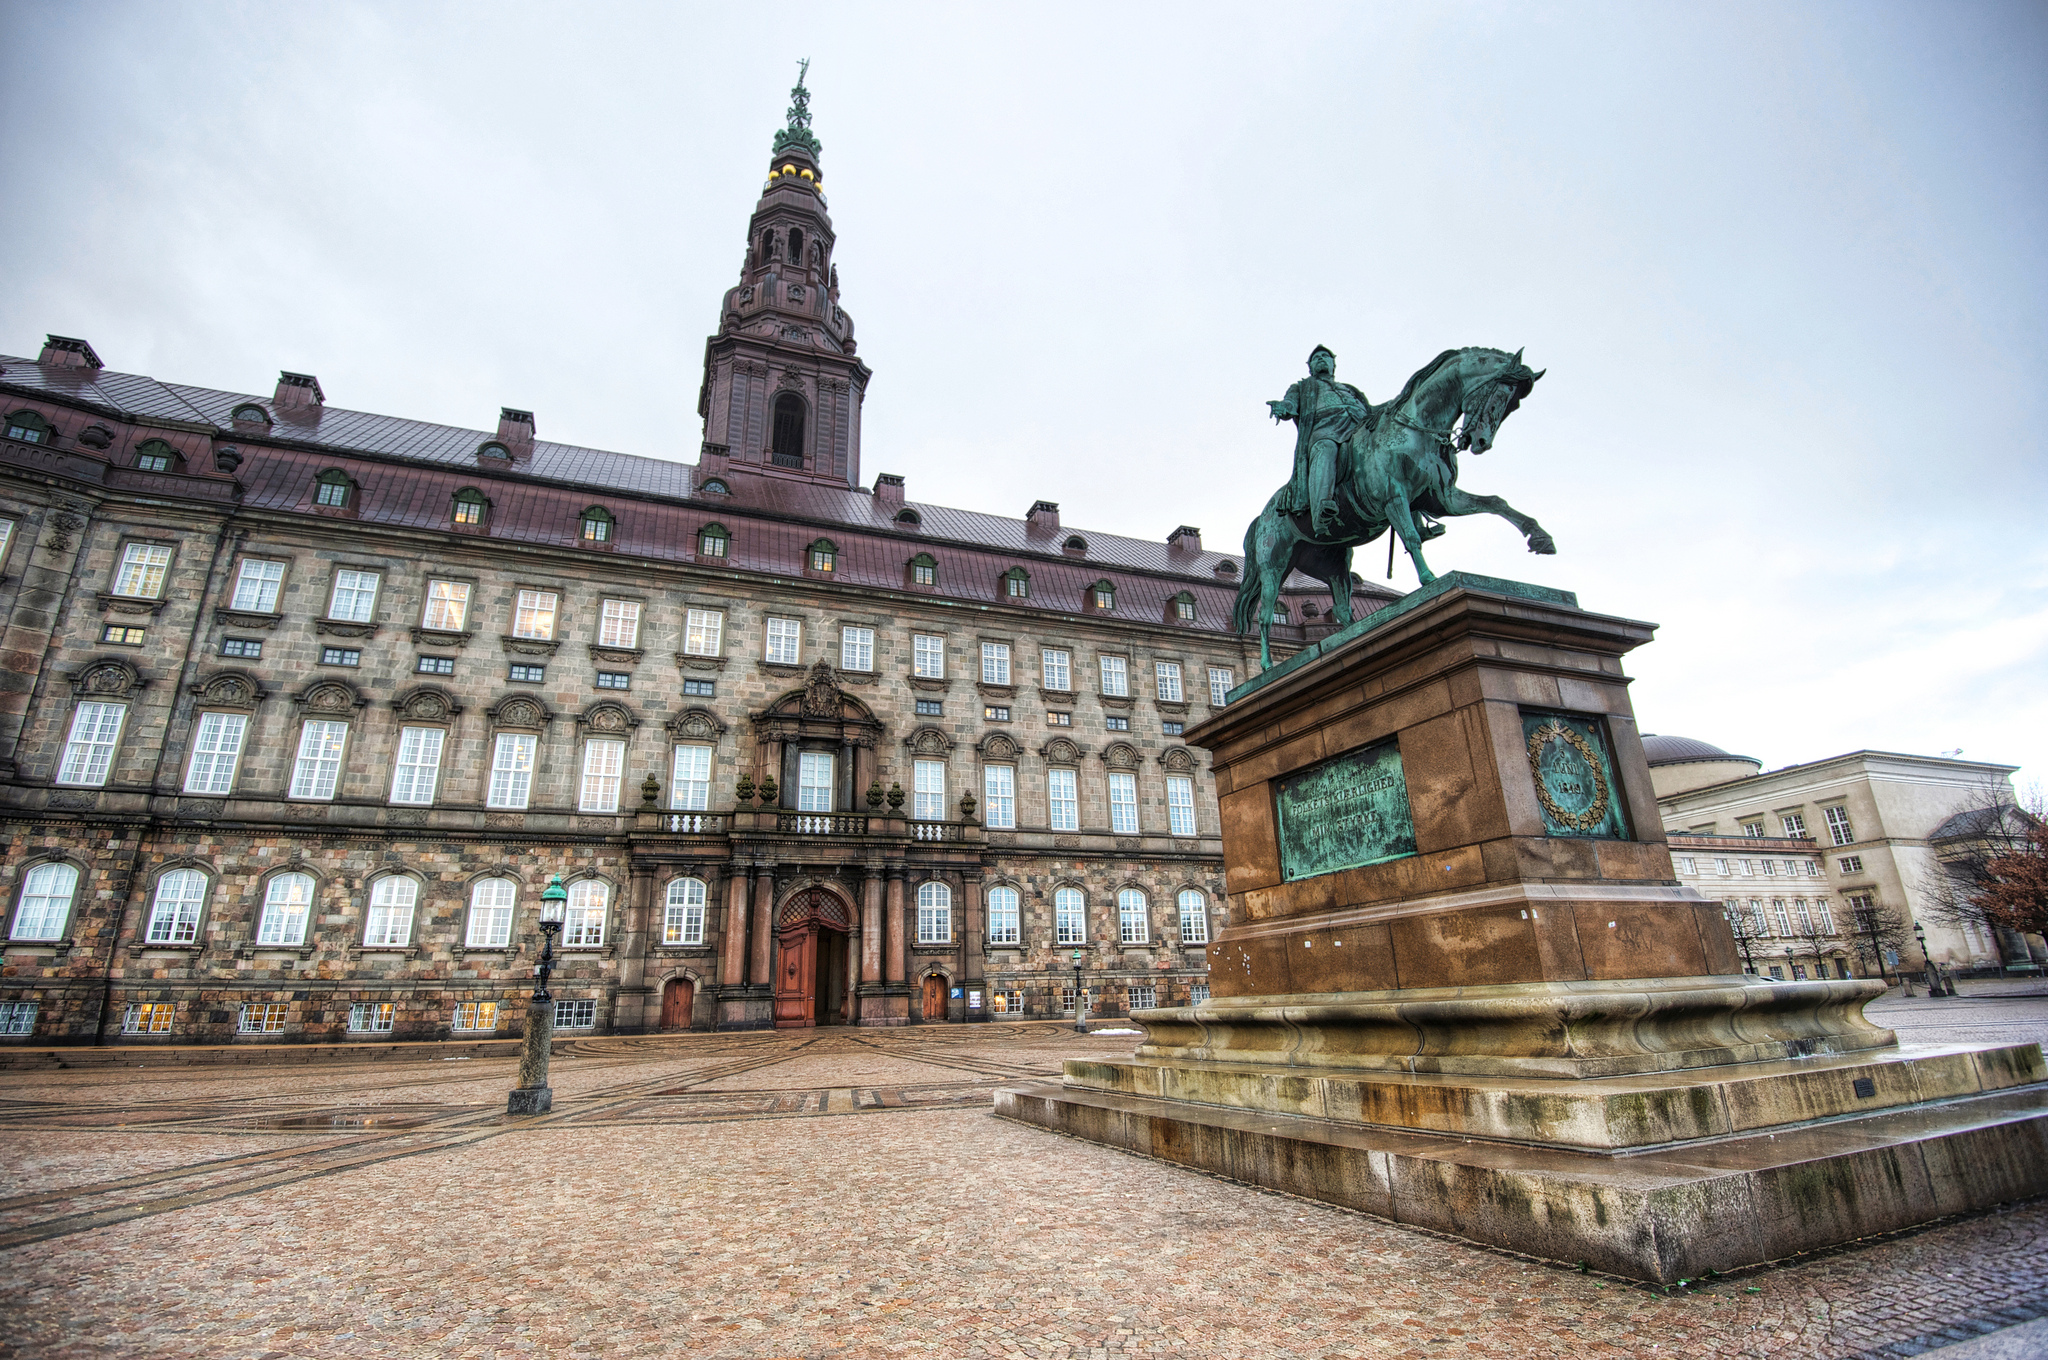 The Danish Parliament Building